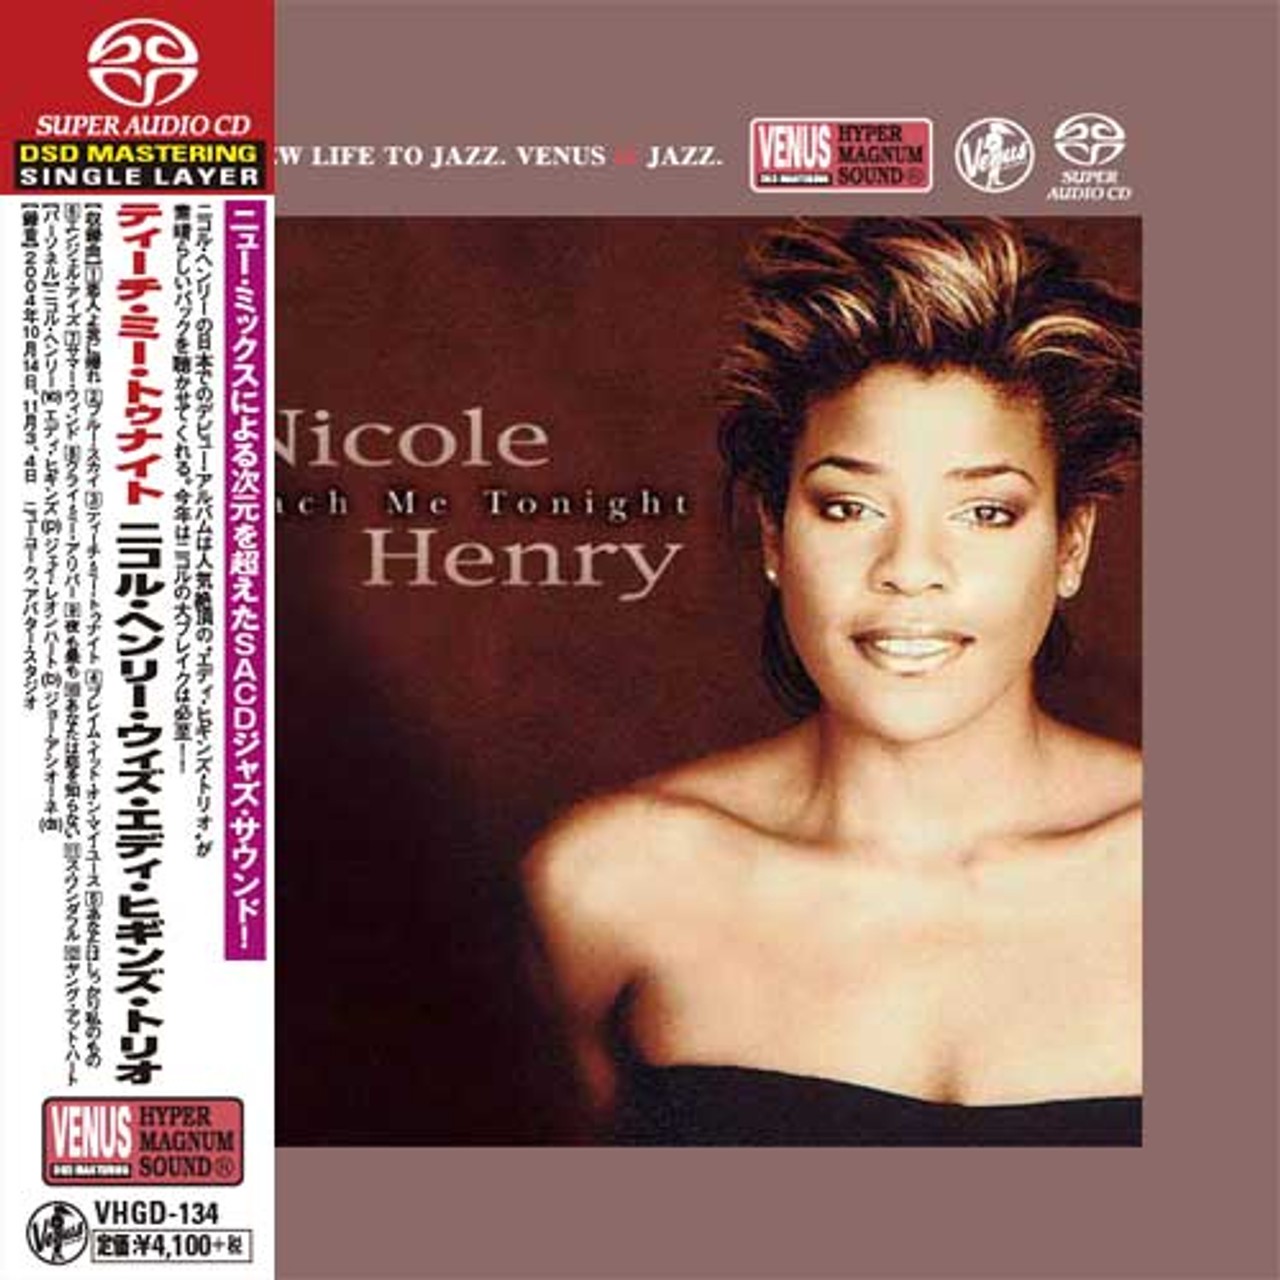 Nicole Henry with Eddie Higgins Trio – Teach Me Tonight (2005) [Japan 2016] SACD ISO + Hi-Res FLAC